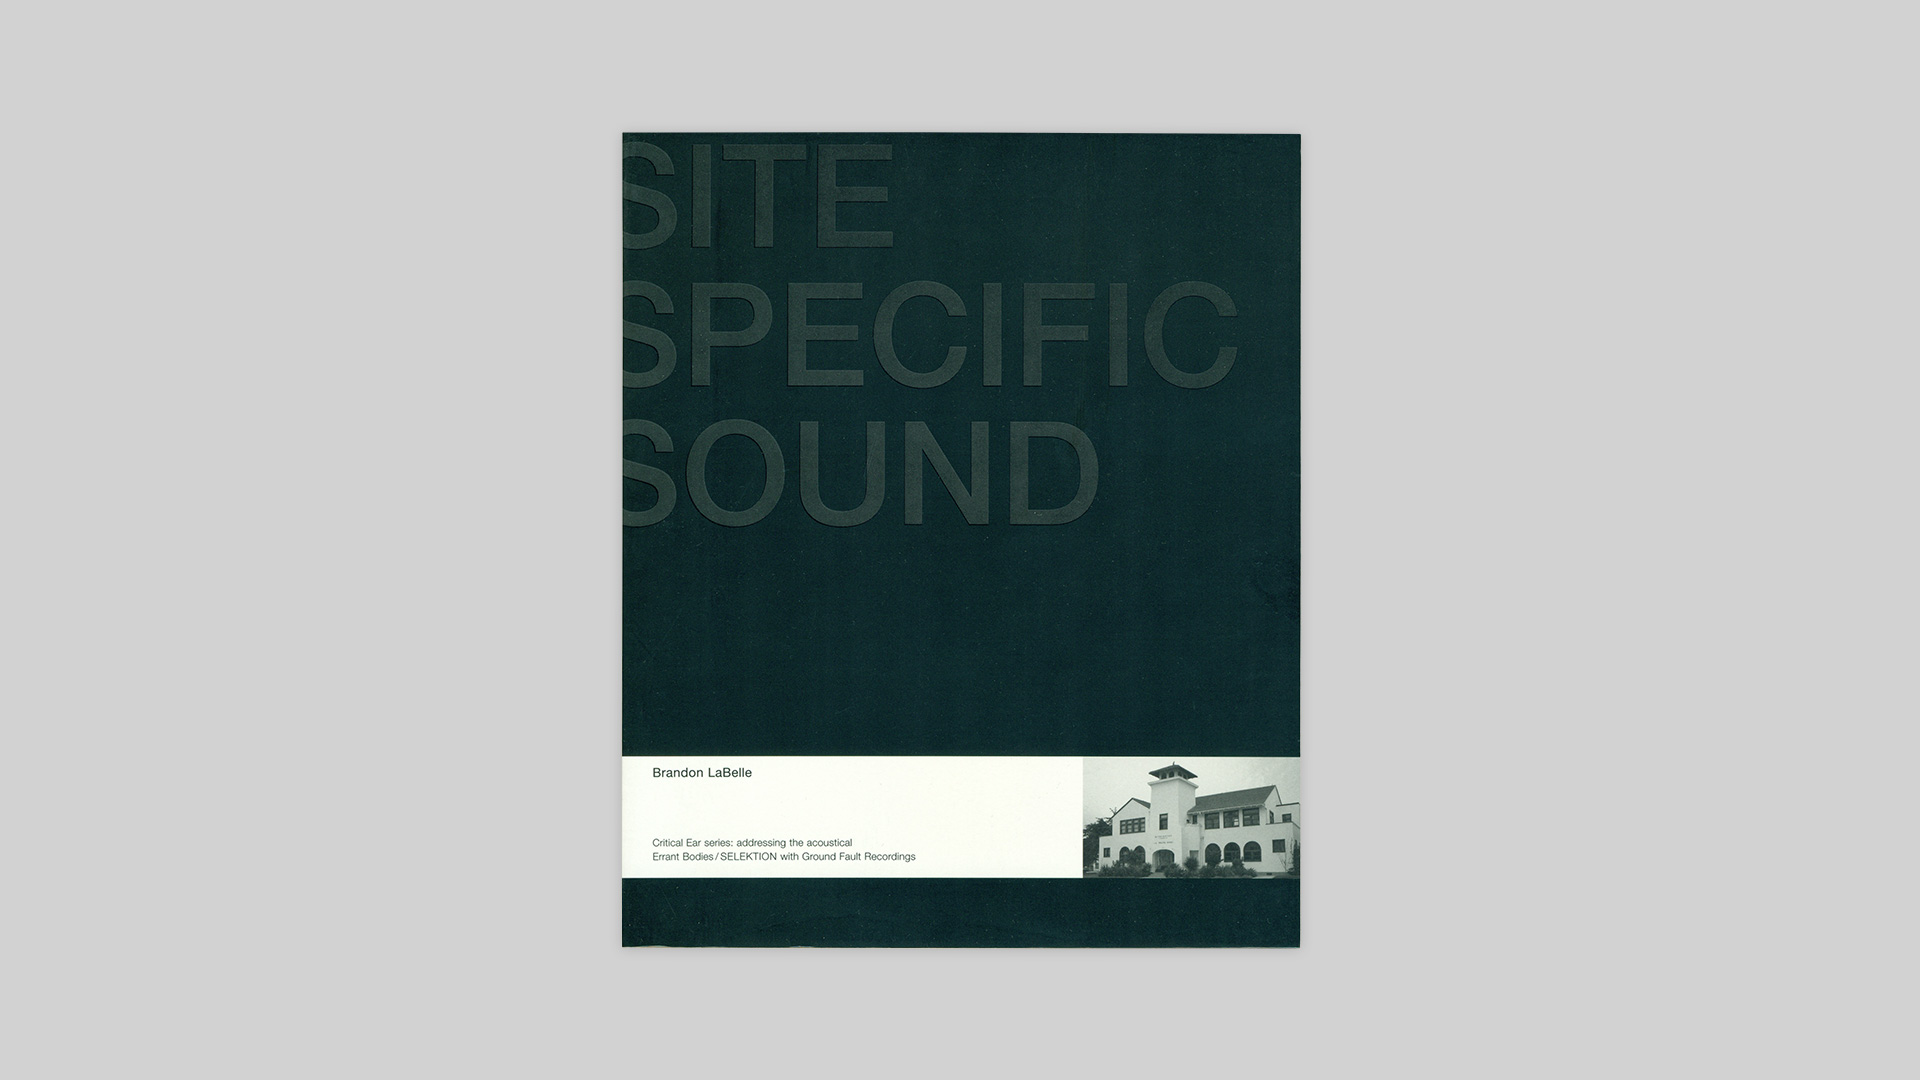 site_specific_sound-1